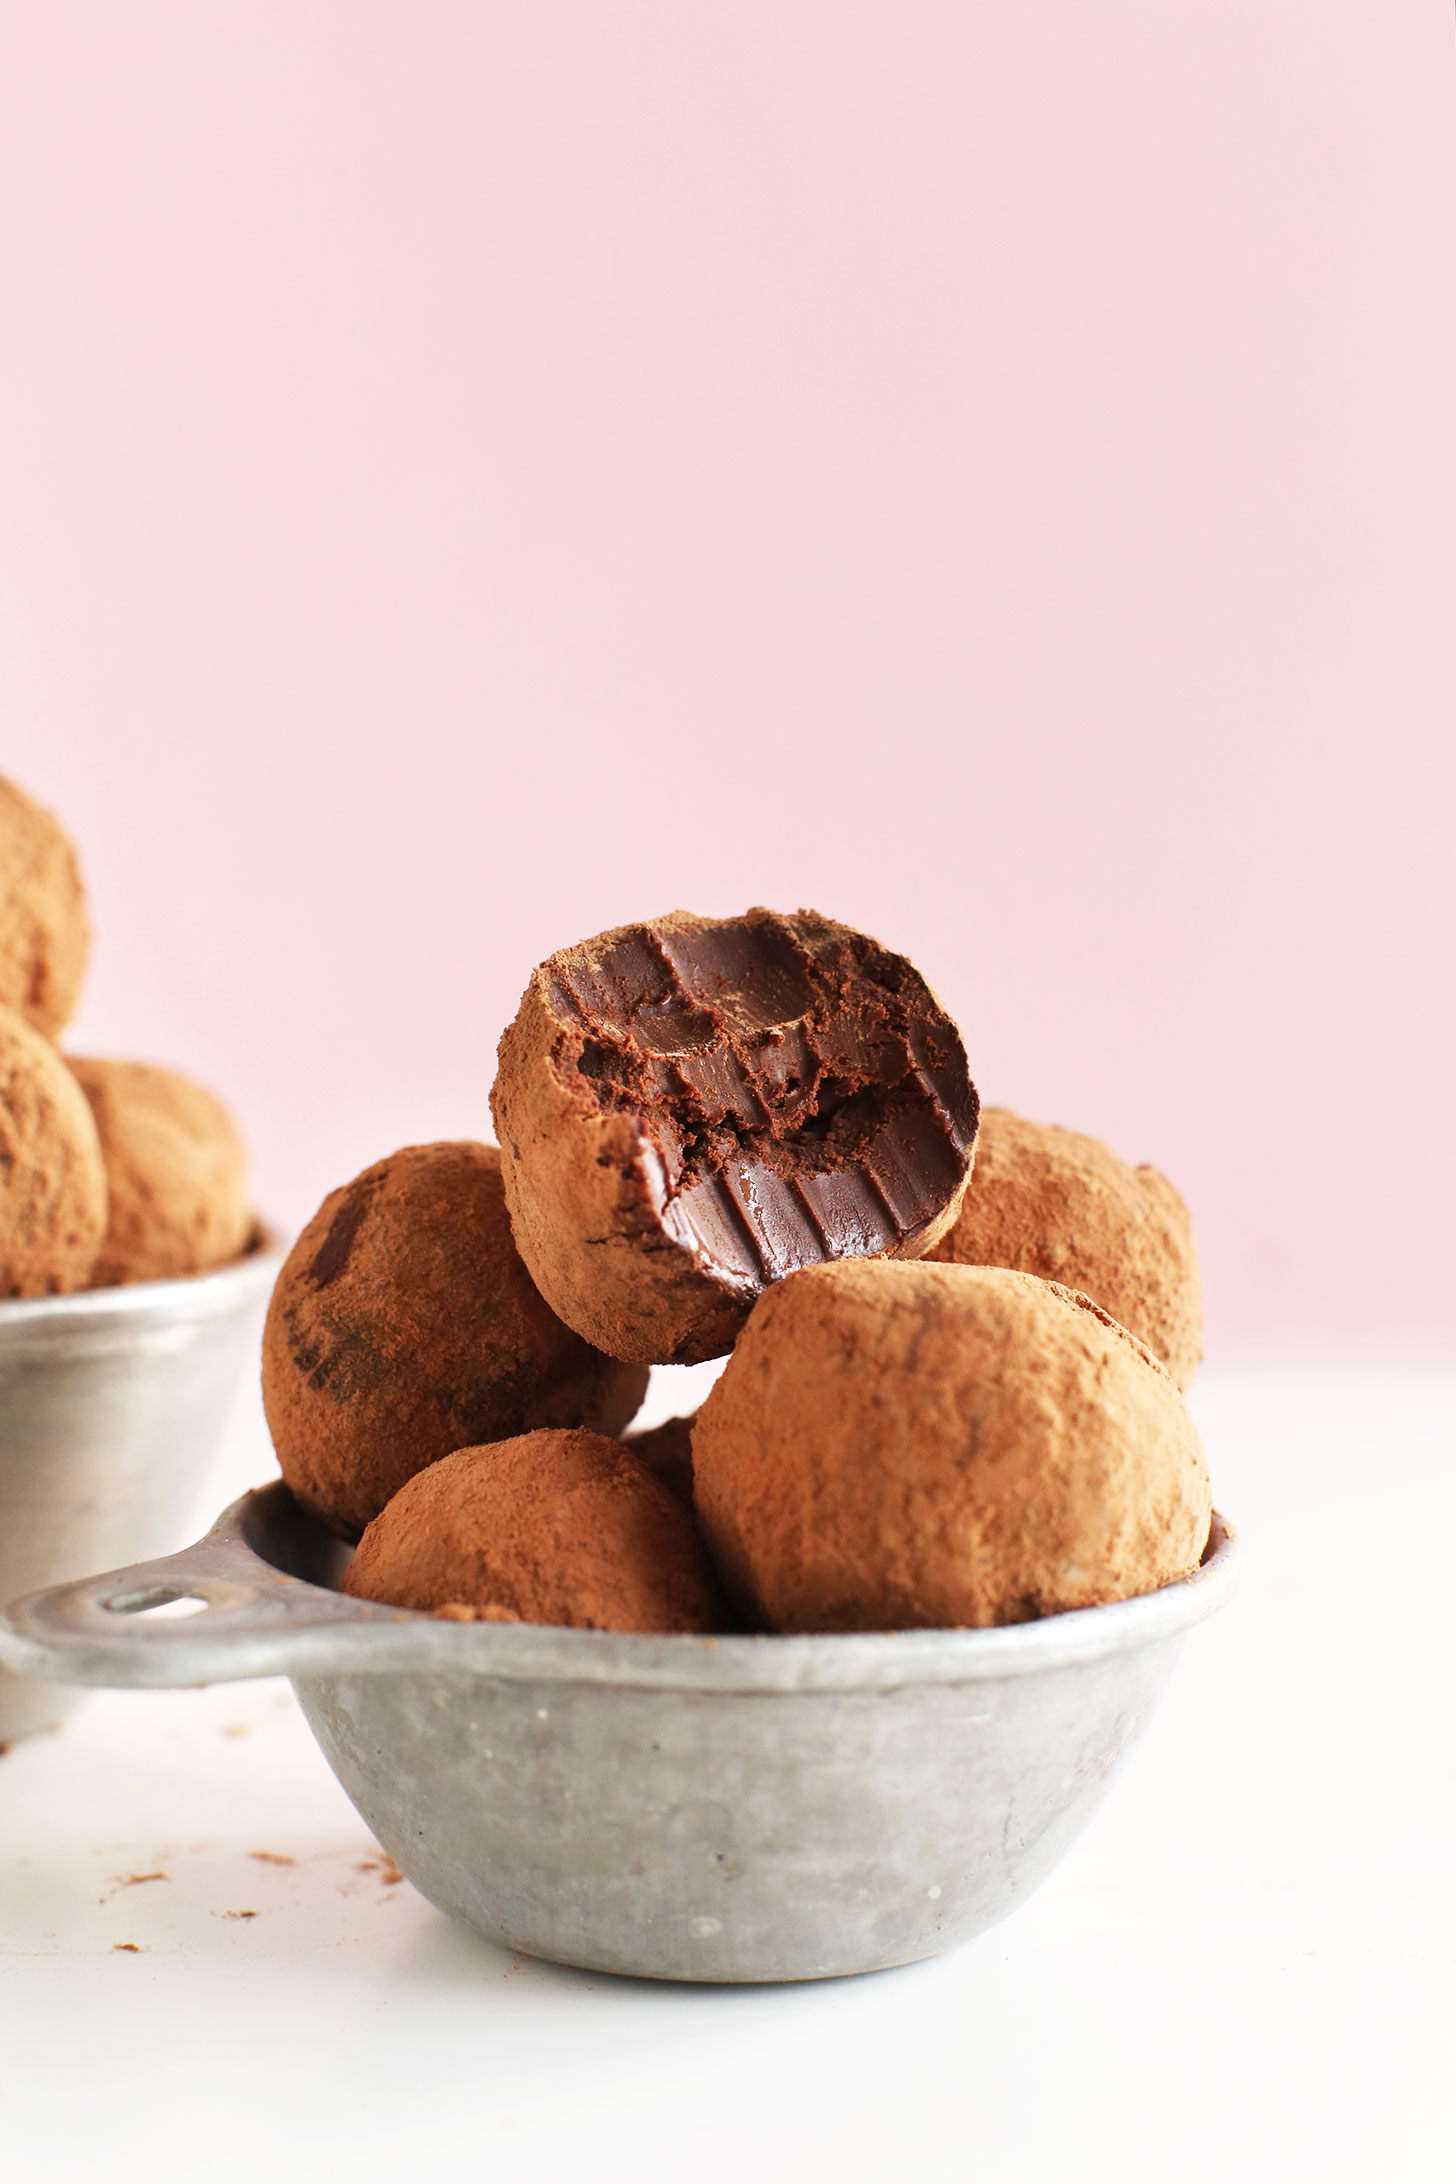 Chocolate Truffles with Sea Salt - The Lemon Bowl®